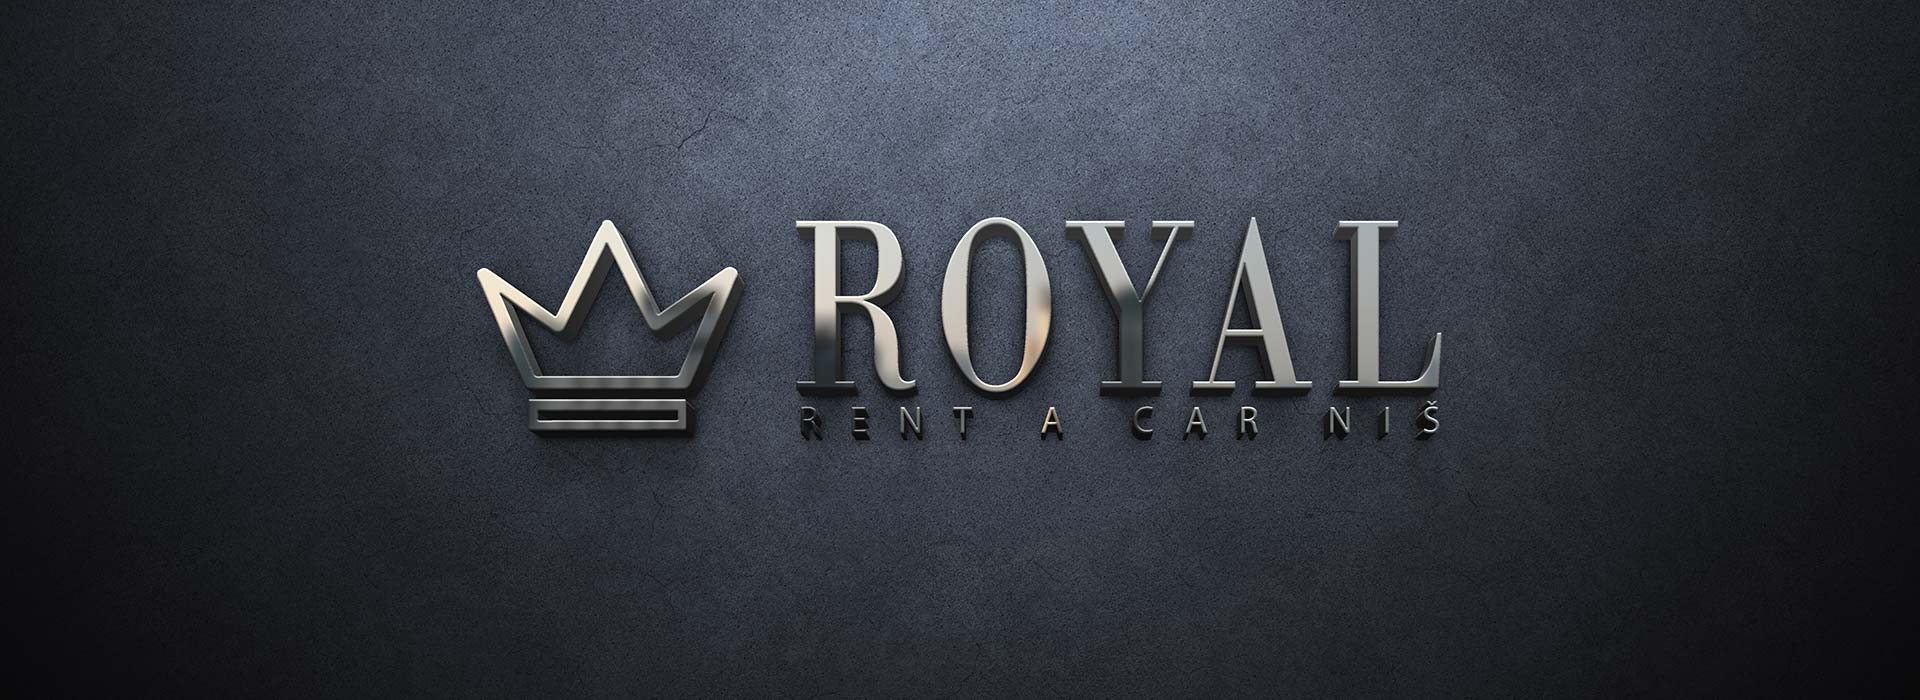 Rent a car Kraljevo | About us